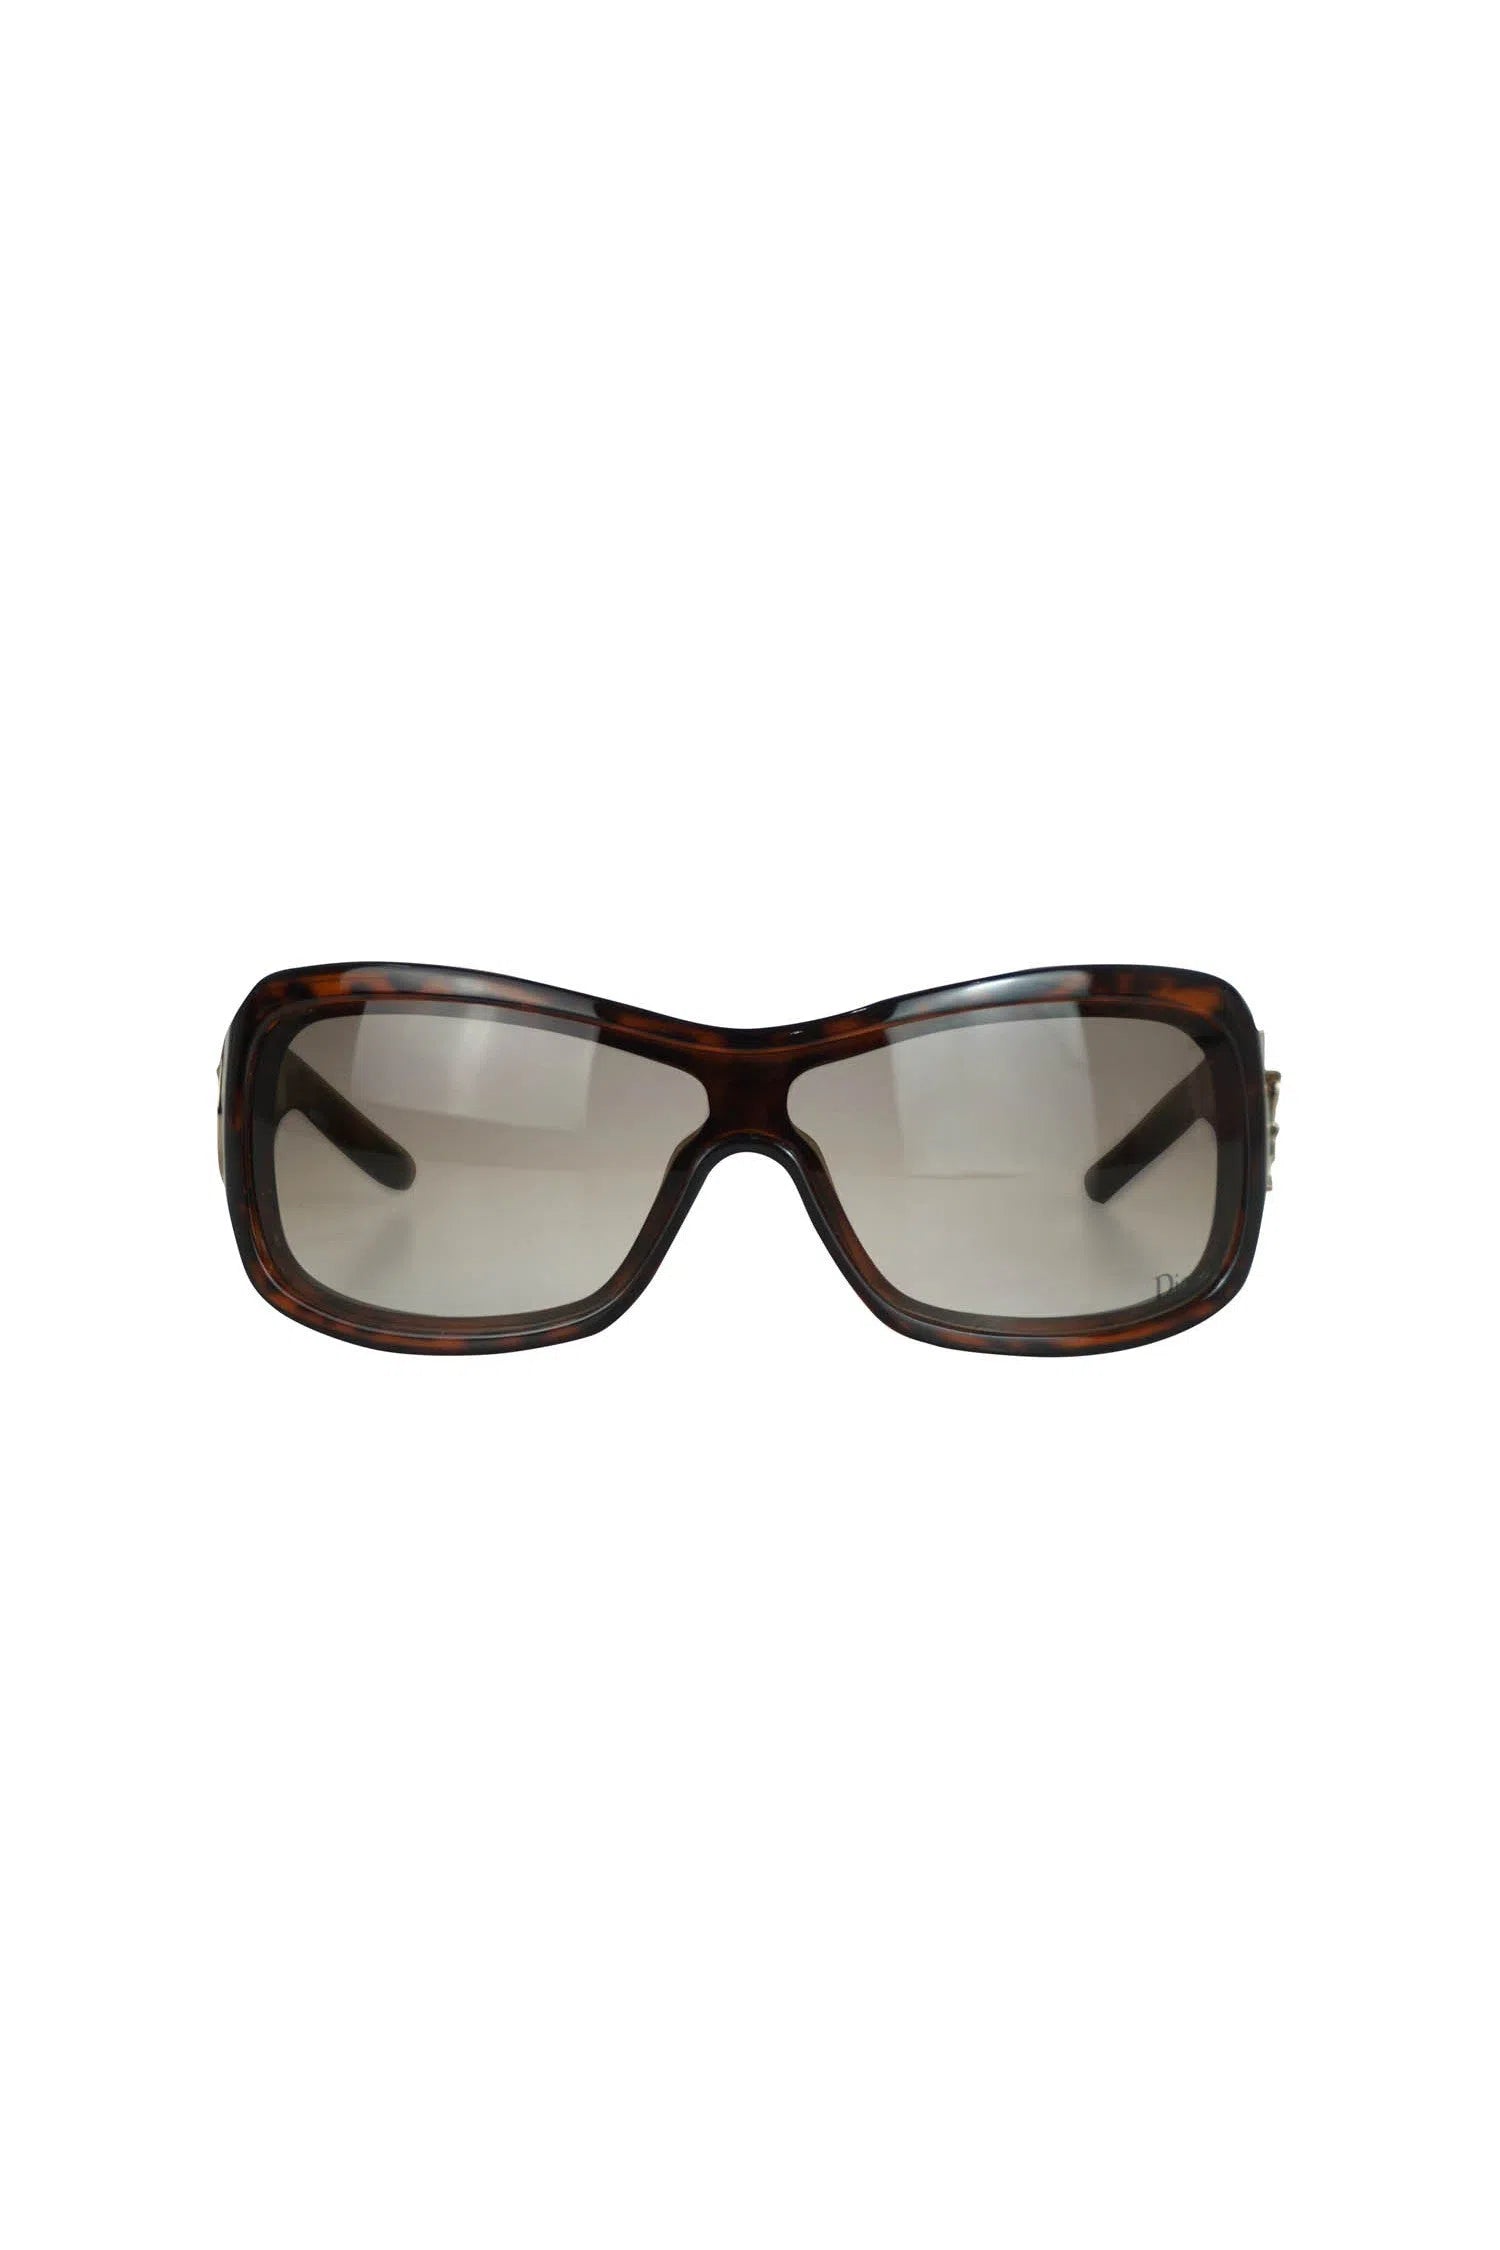 Christian Dior Tortoise Large D Cannage Sunglasses - Foxy Couture Carmel